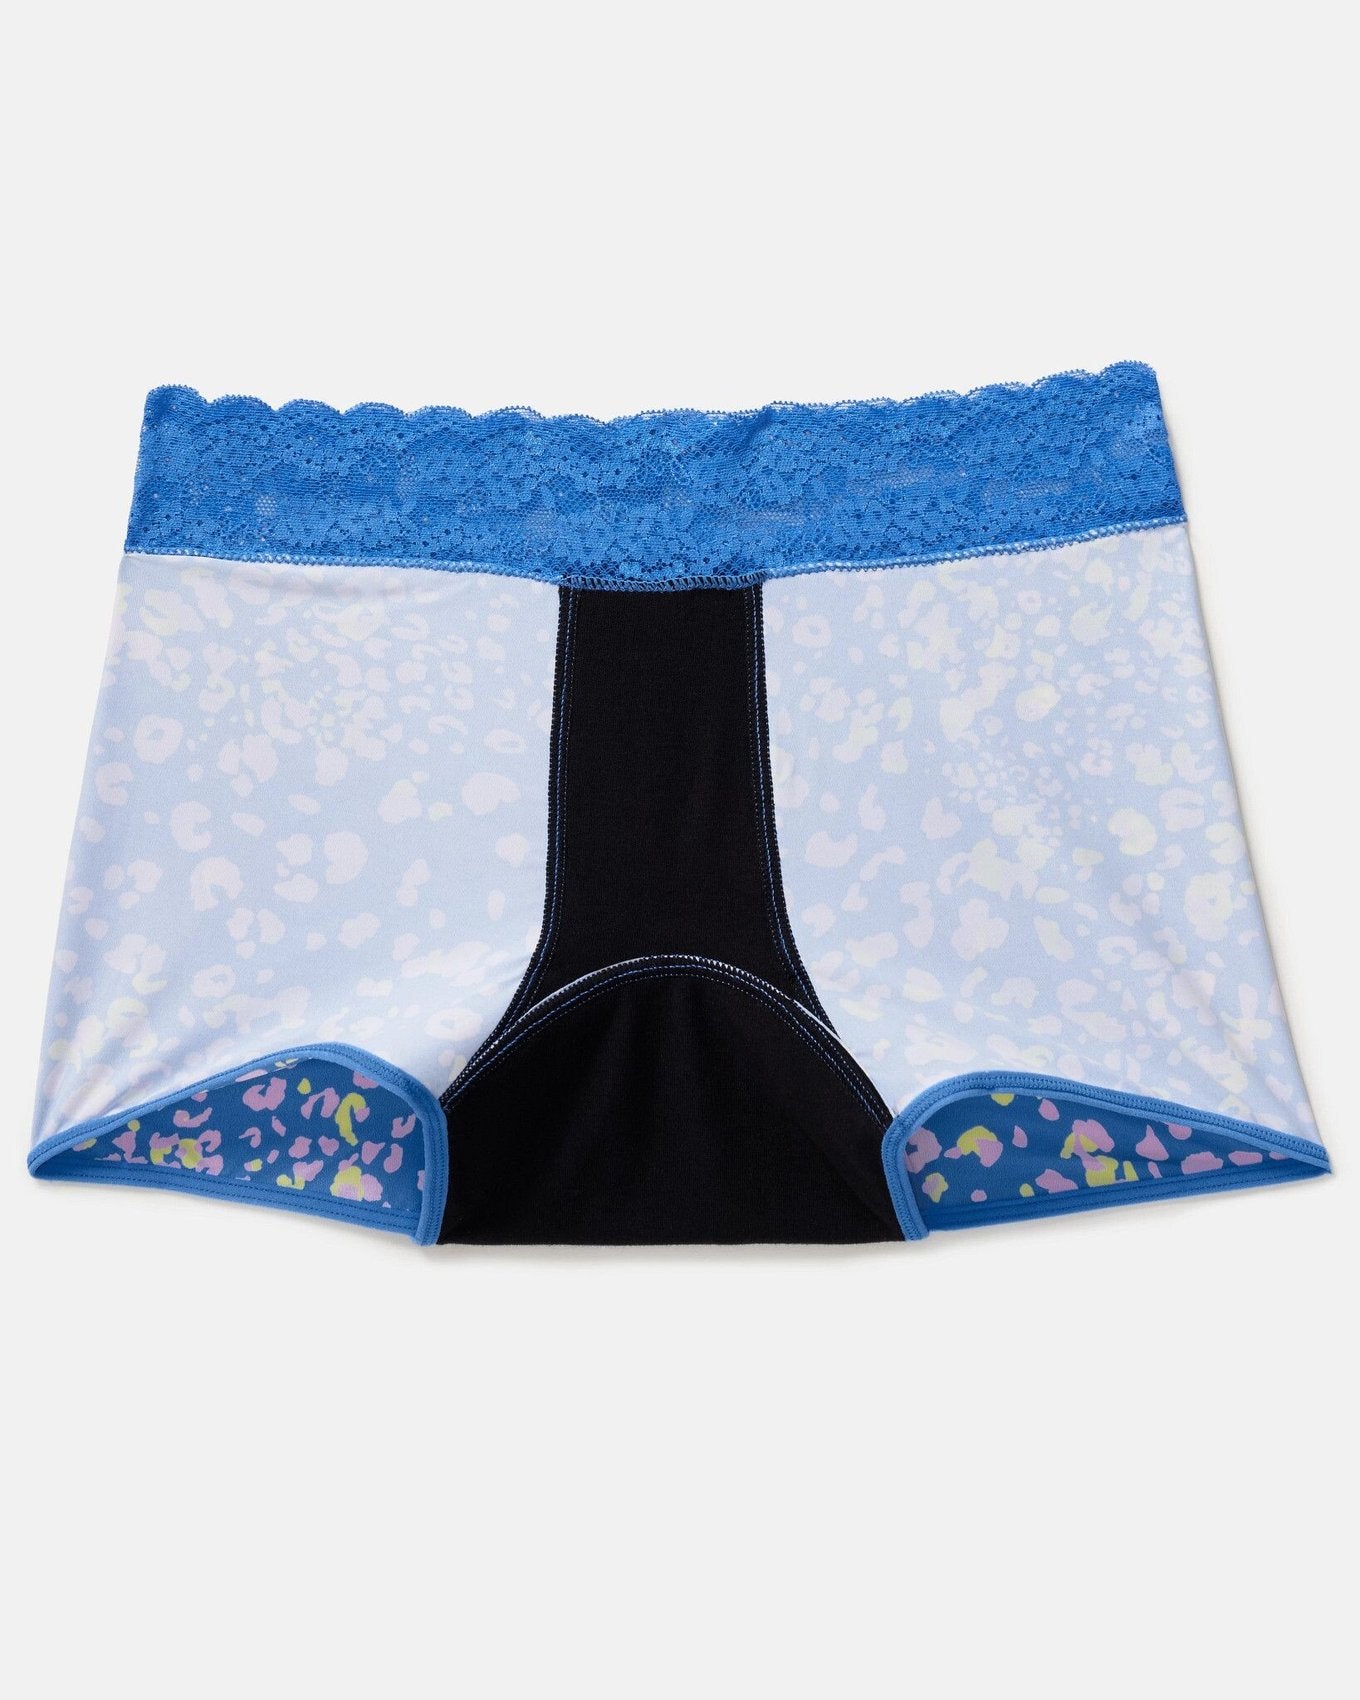 Joyja Emily period-proof panty in color Jungle Confetti C01 and shape shortie